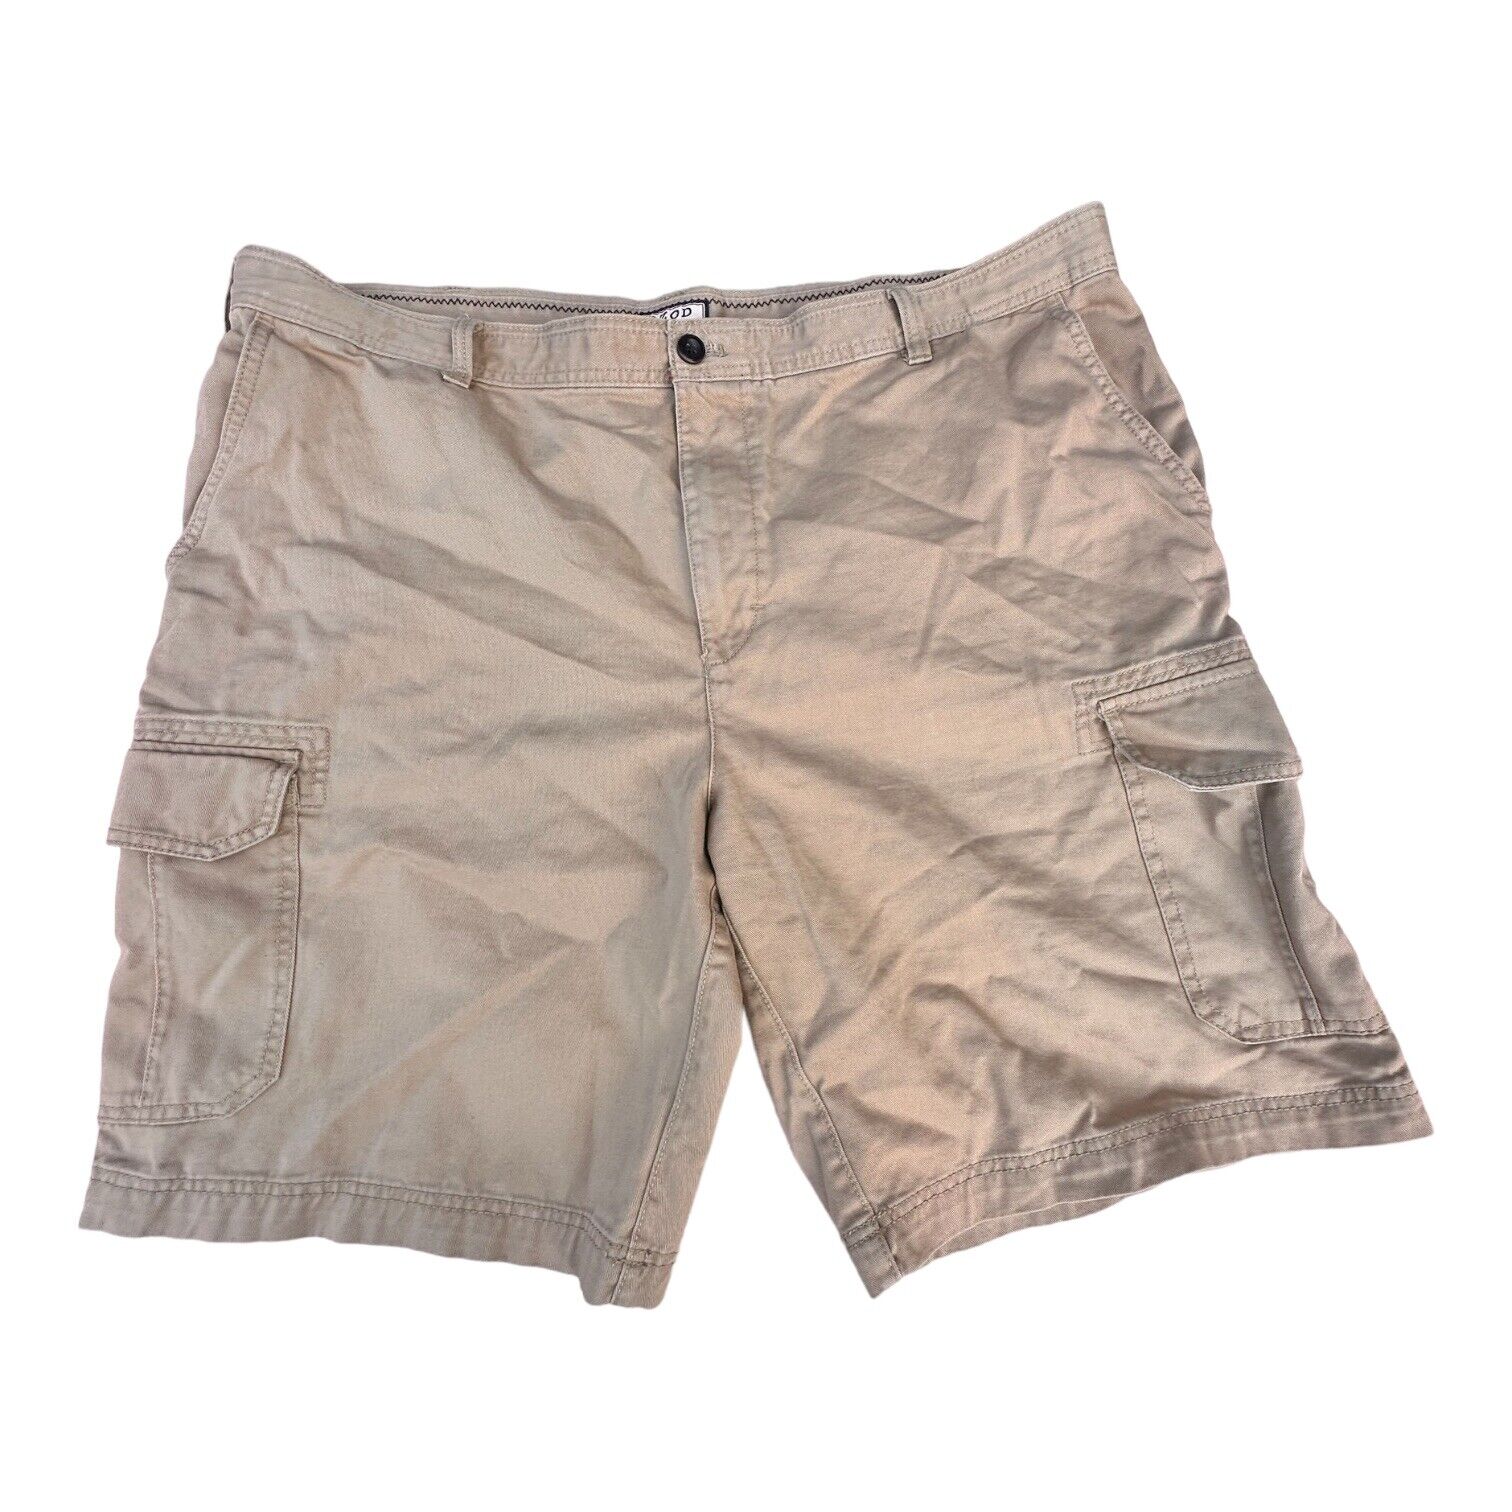 IZOD Shorts Mens 42X10 Brown Tan Khaki Cargo Hiking Fishing Outdoors Casual